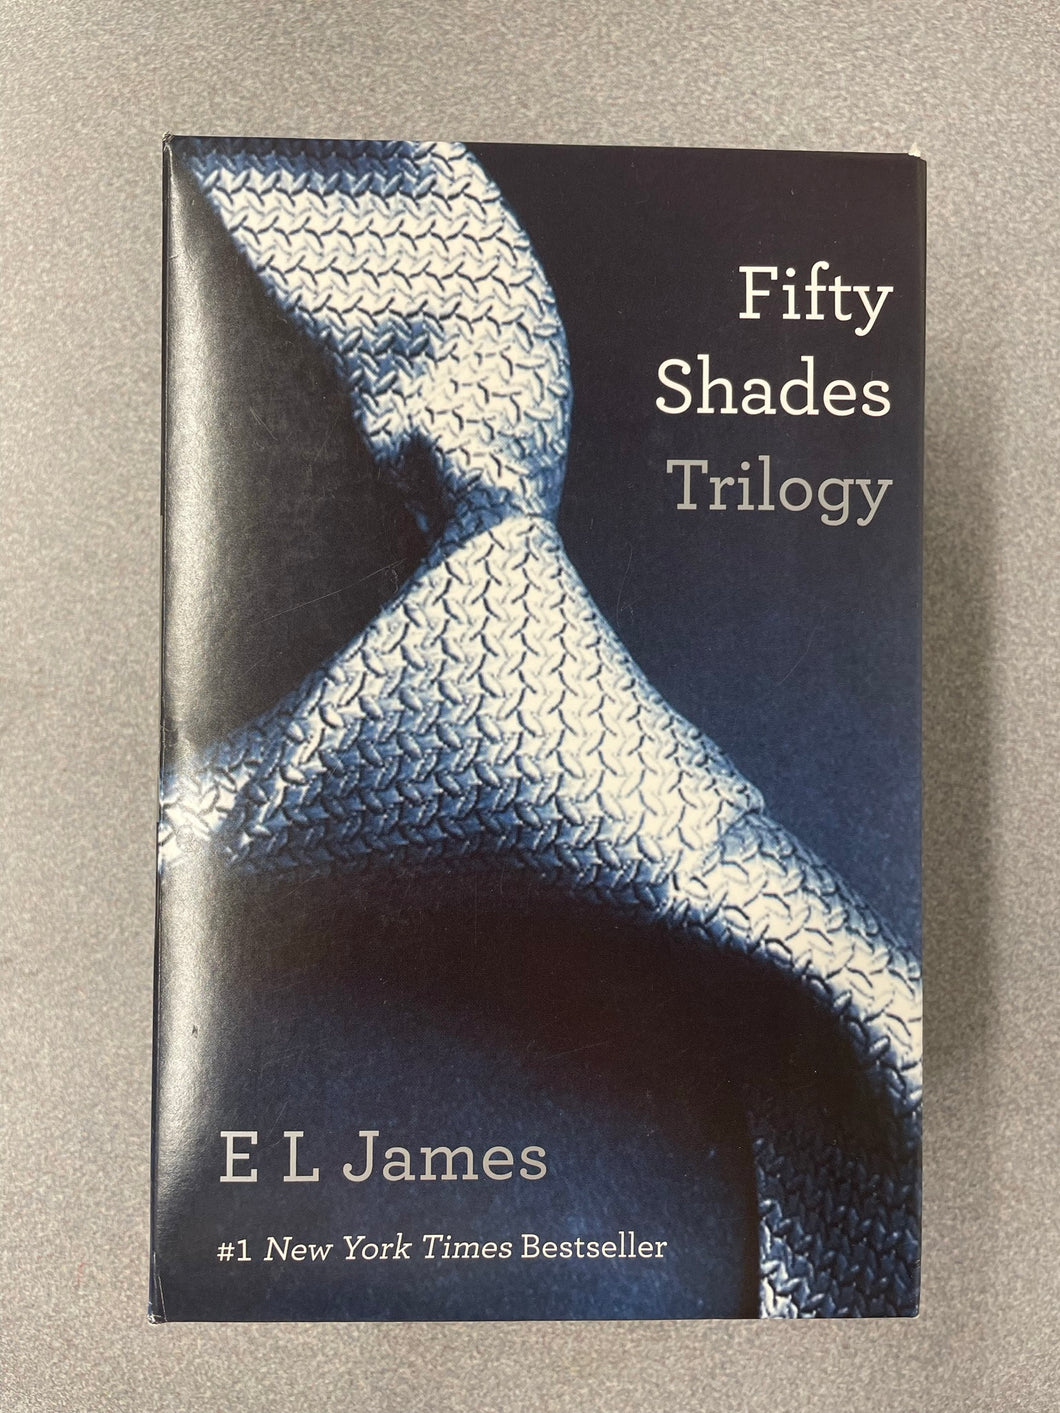 James, E. L., Fifty Shades Trilogy [2011] ER 7/23